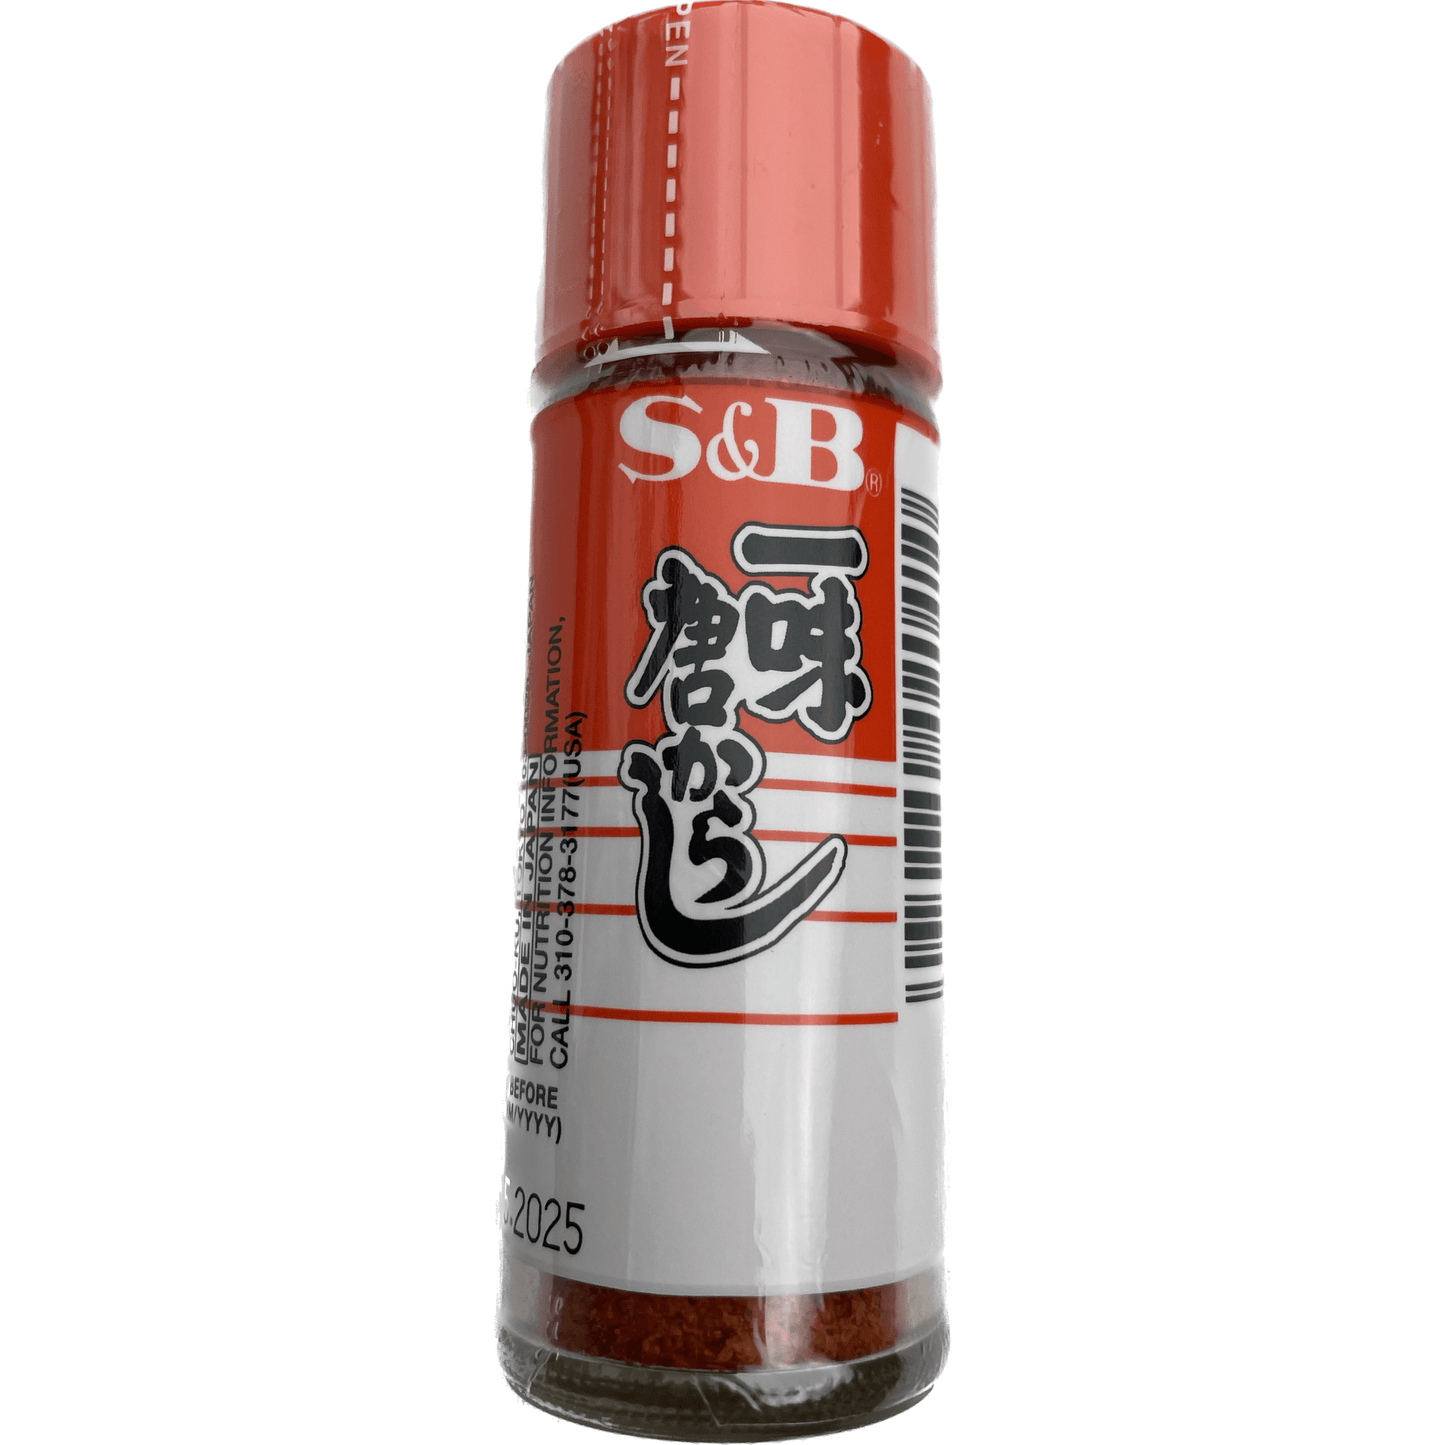 S&B Chili Pepper Bottle S&B　一味とうがらし　瓶　15g - RiceWineShop